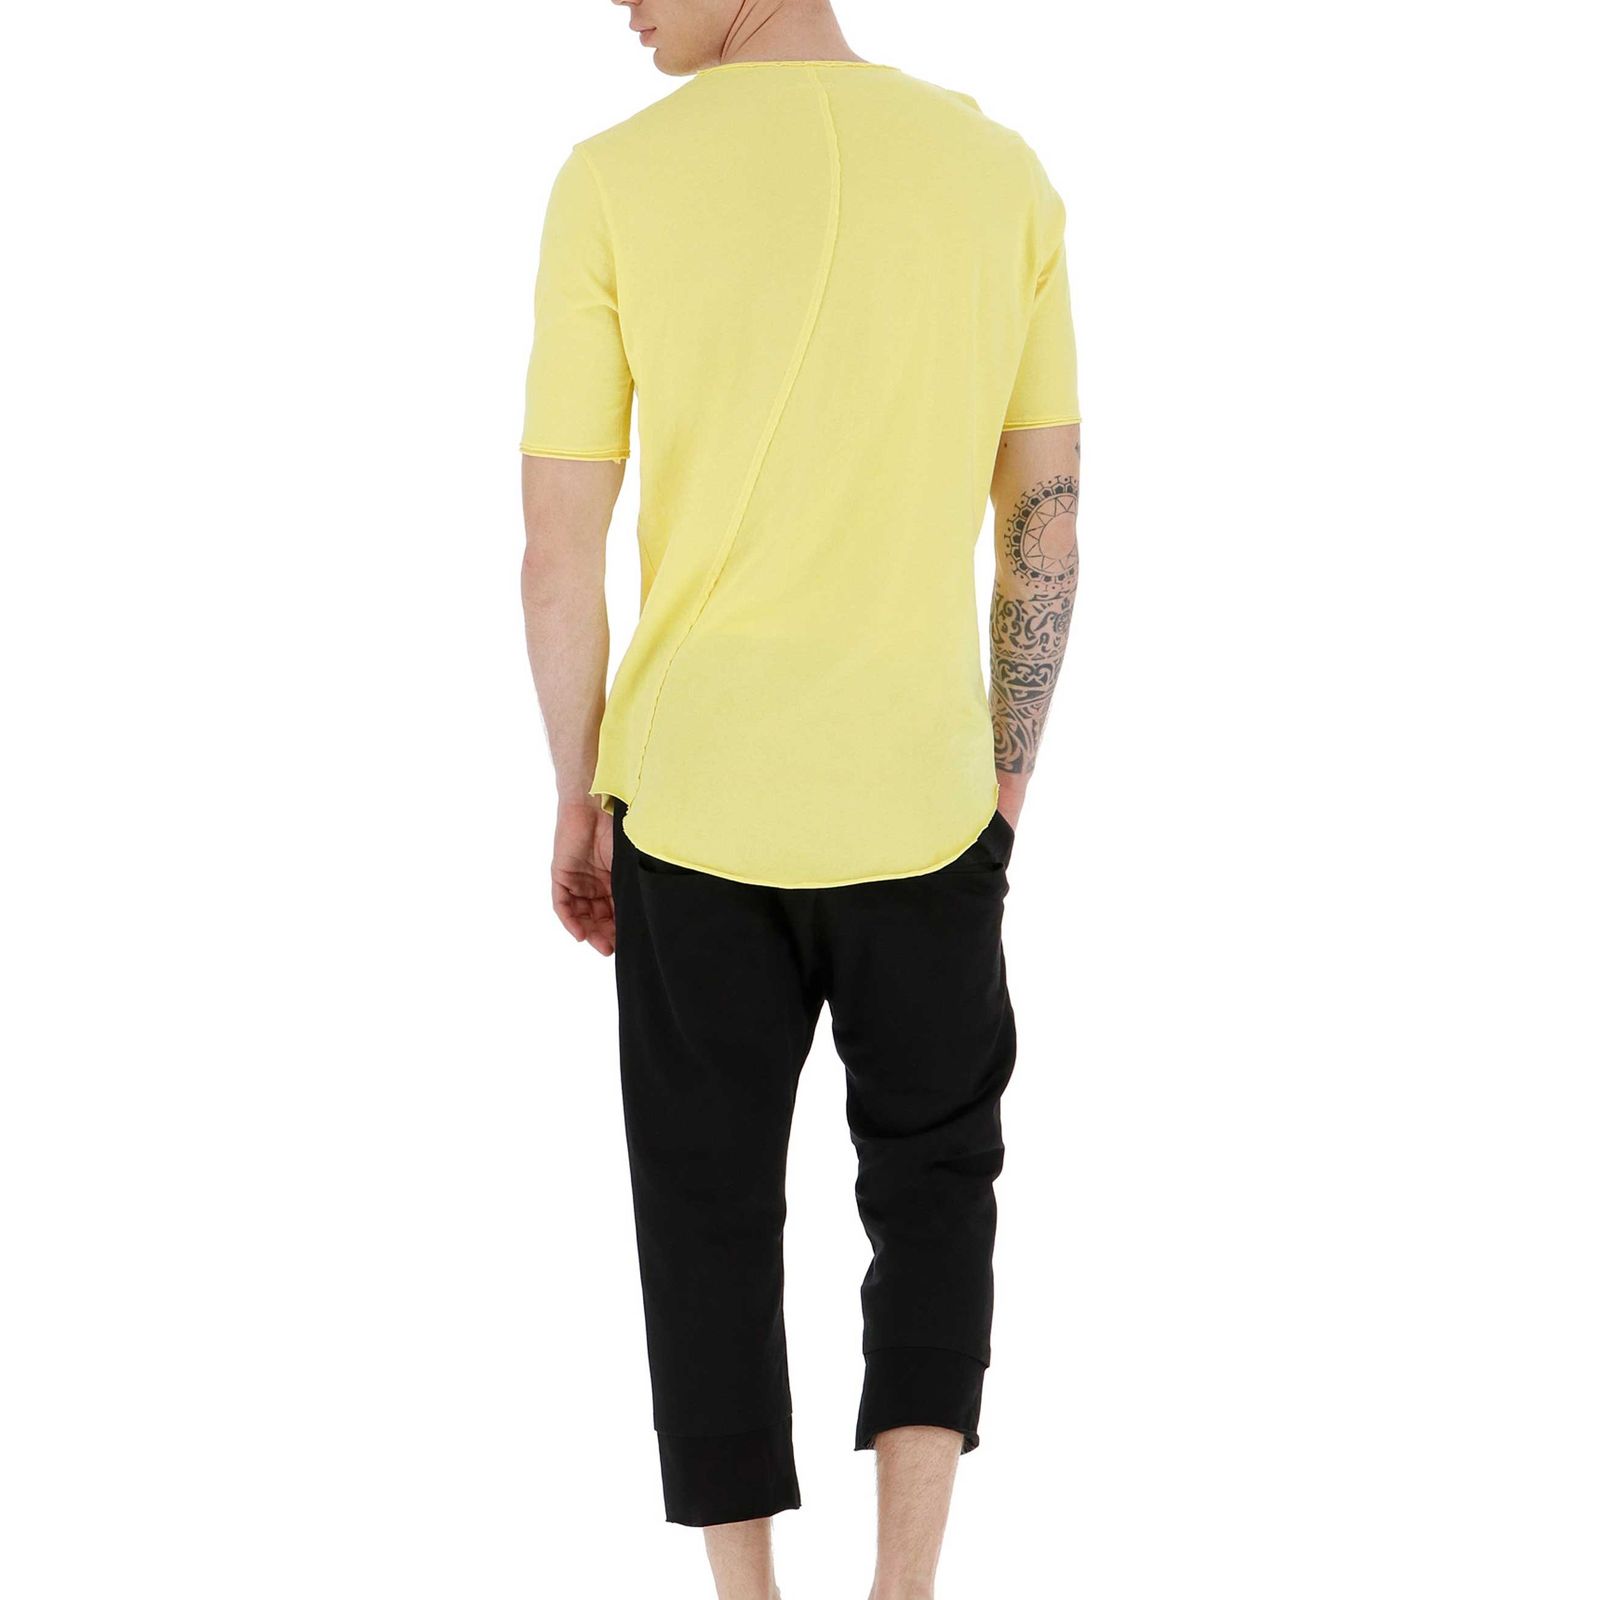 تی شرت نخی یقه گرد مردانه - امپریال - زرد - 3